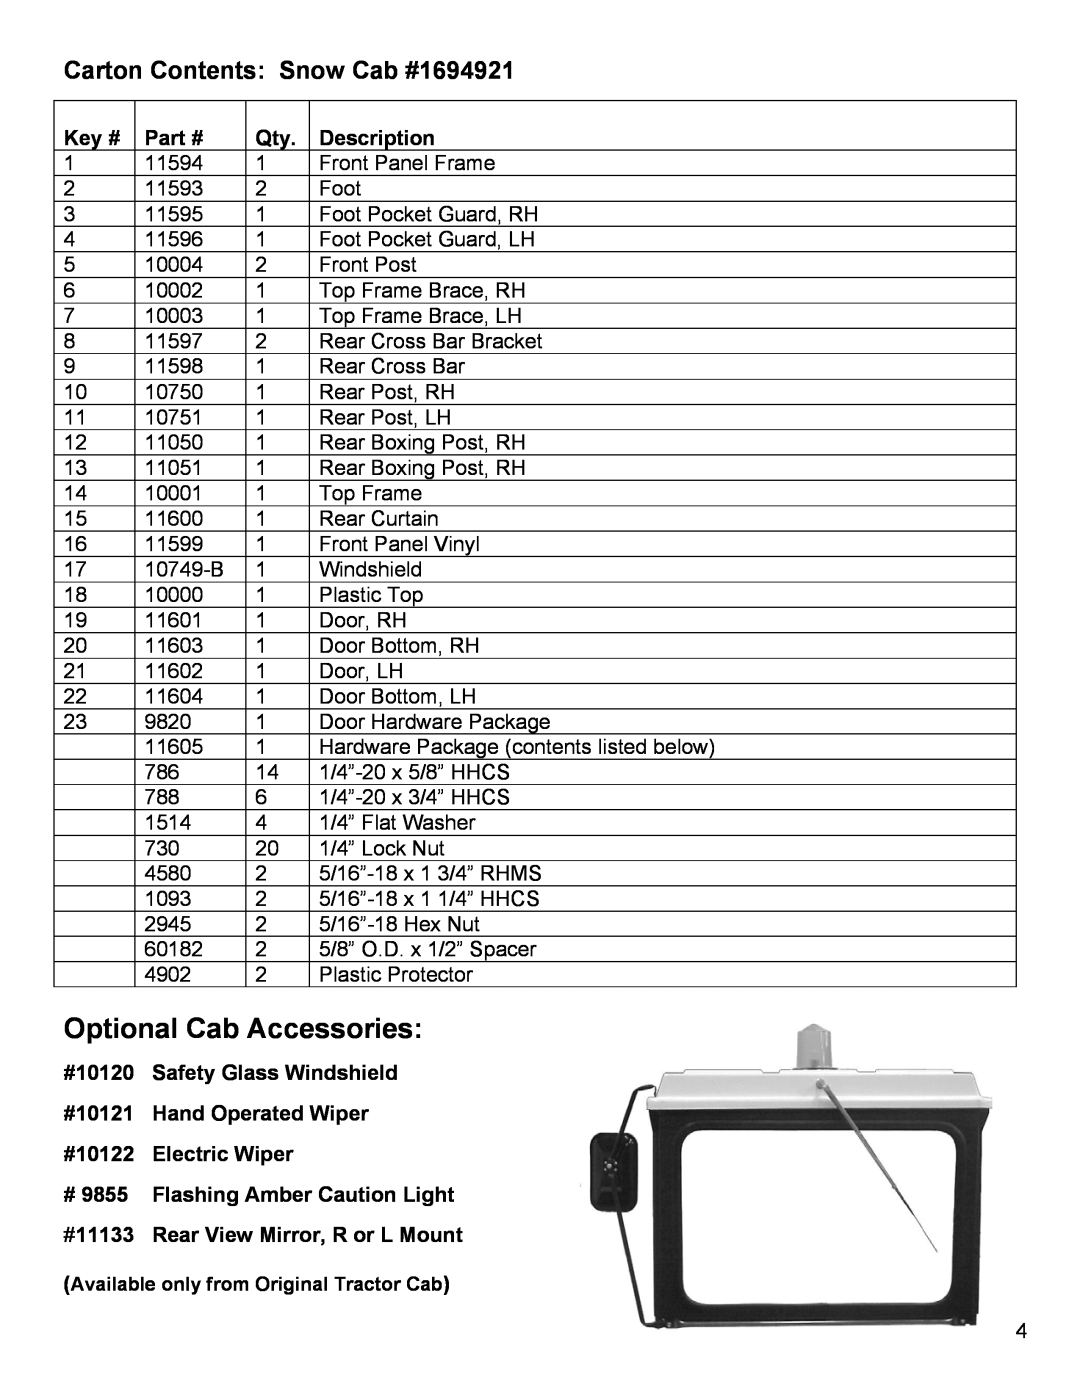 Snapper Optional Cab Accessories, Carton Contents Snow Cab #1694921, Key #, Description, #10120 Safety Glass Windshield 